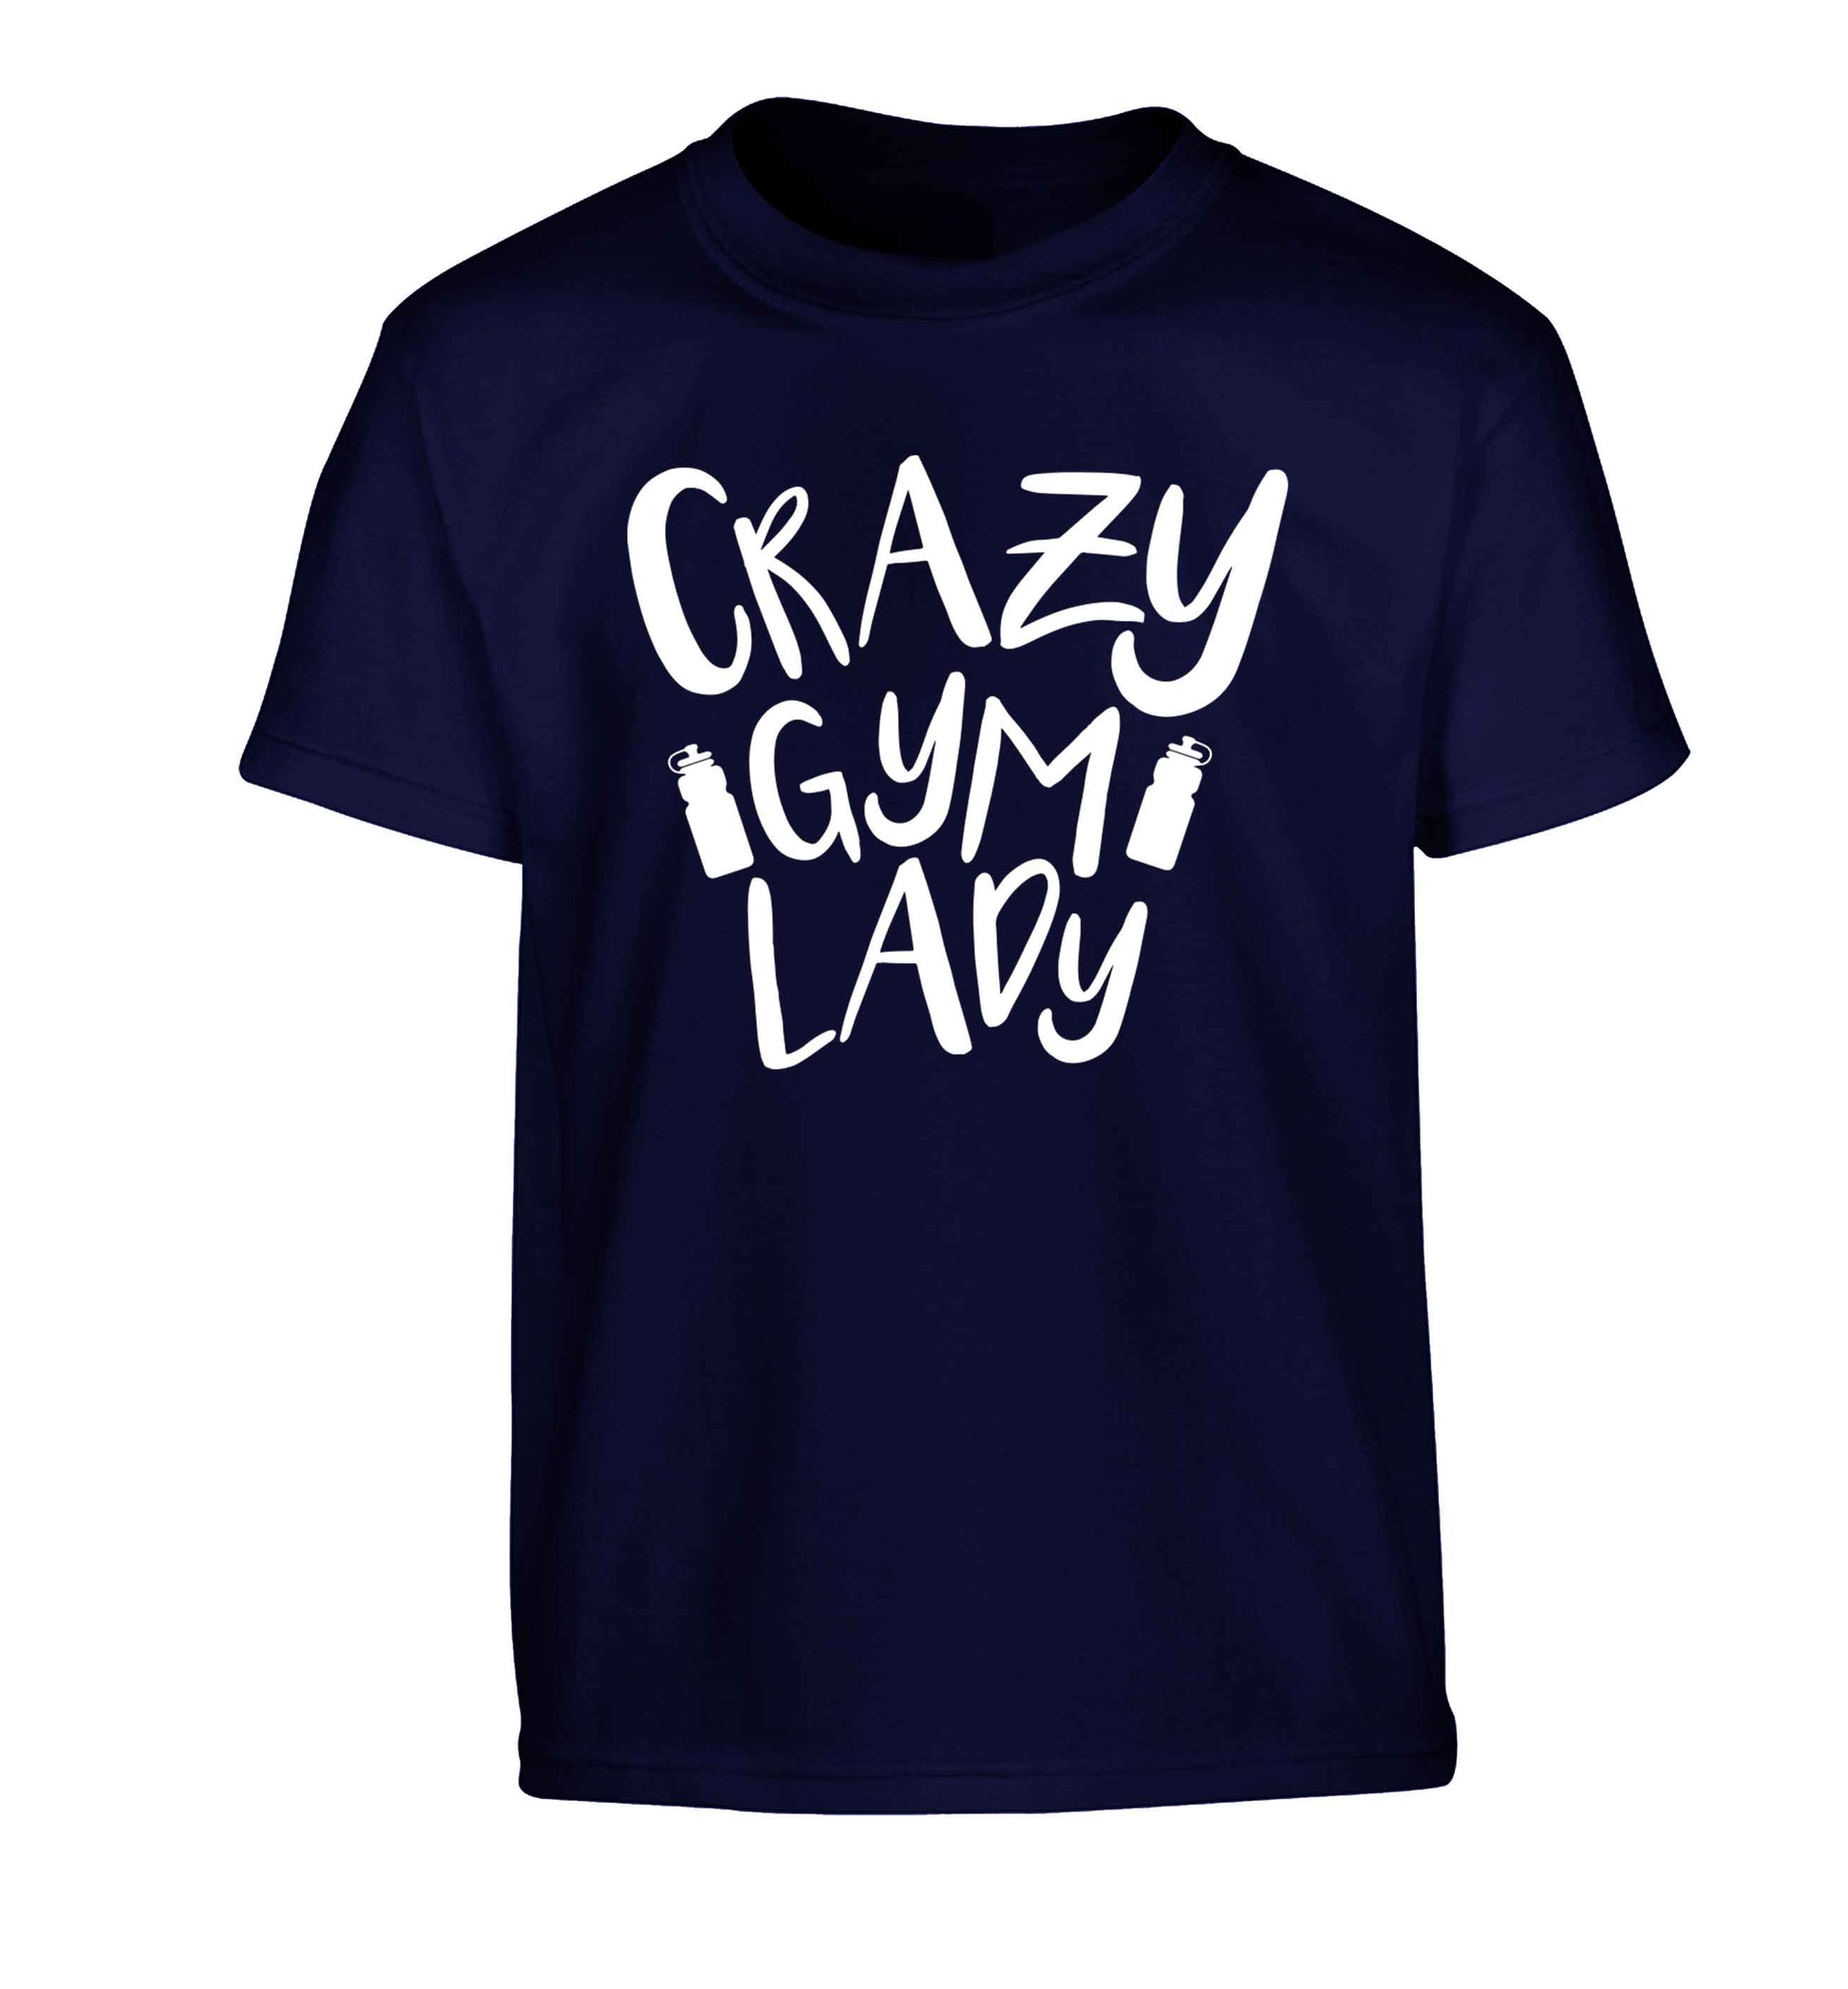 Crazy gym lady Children's navy Tshirt 12-13 Years